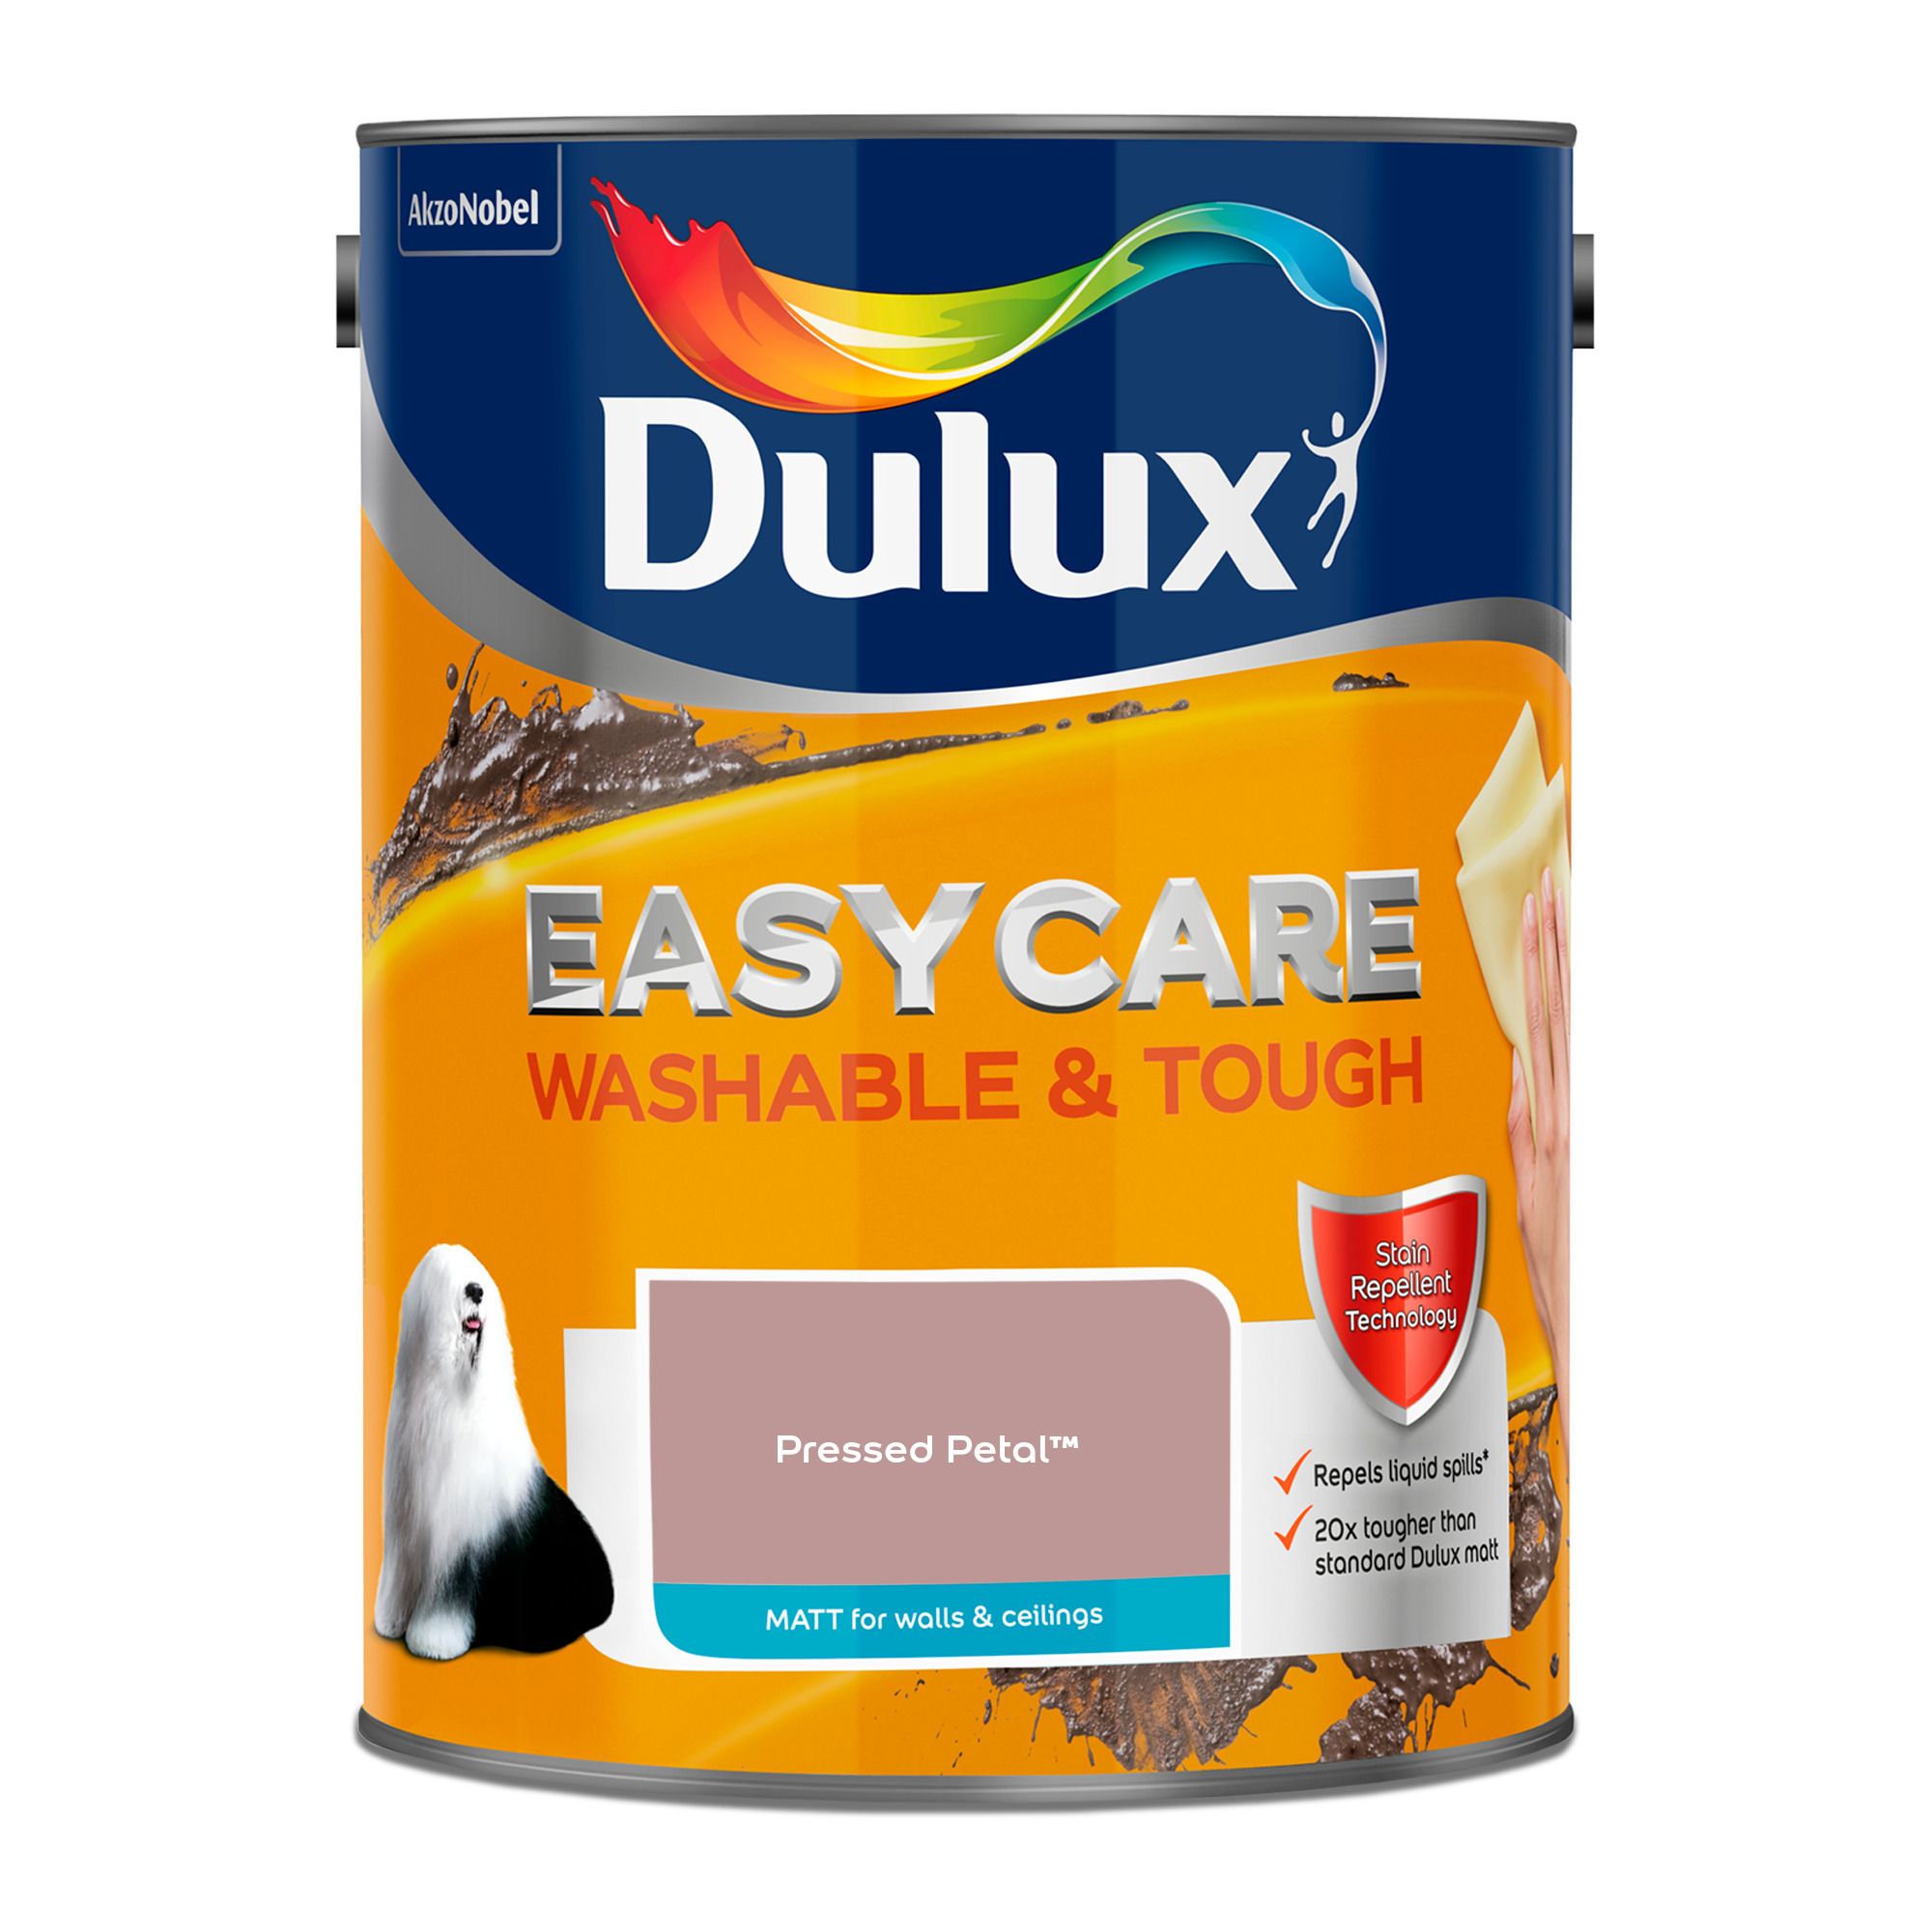 Dulux Easycare Pressed Petal Matt Wall paint, 5L